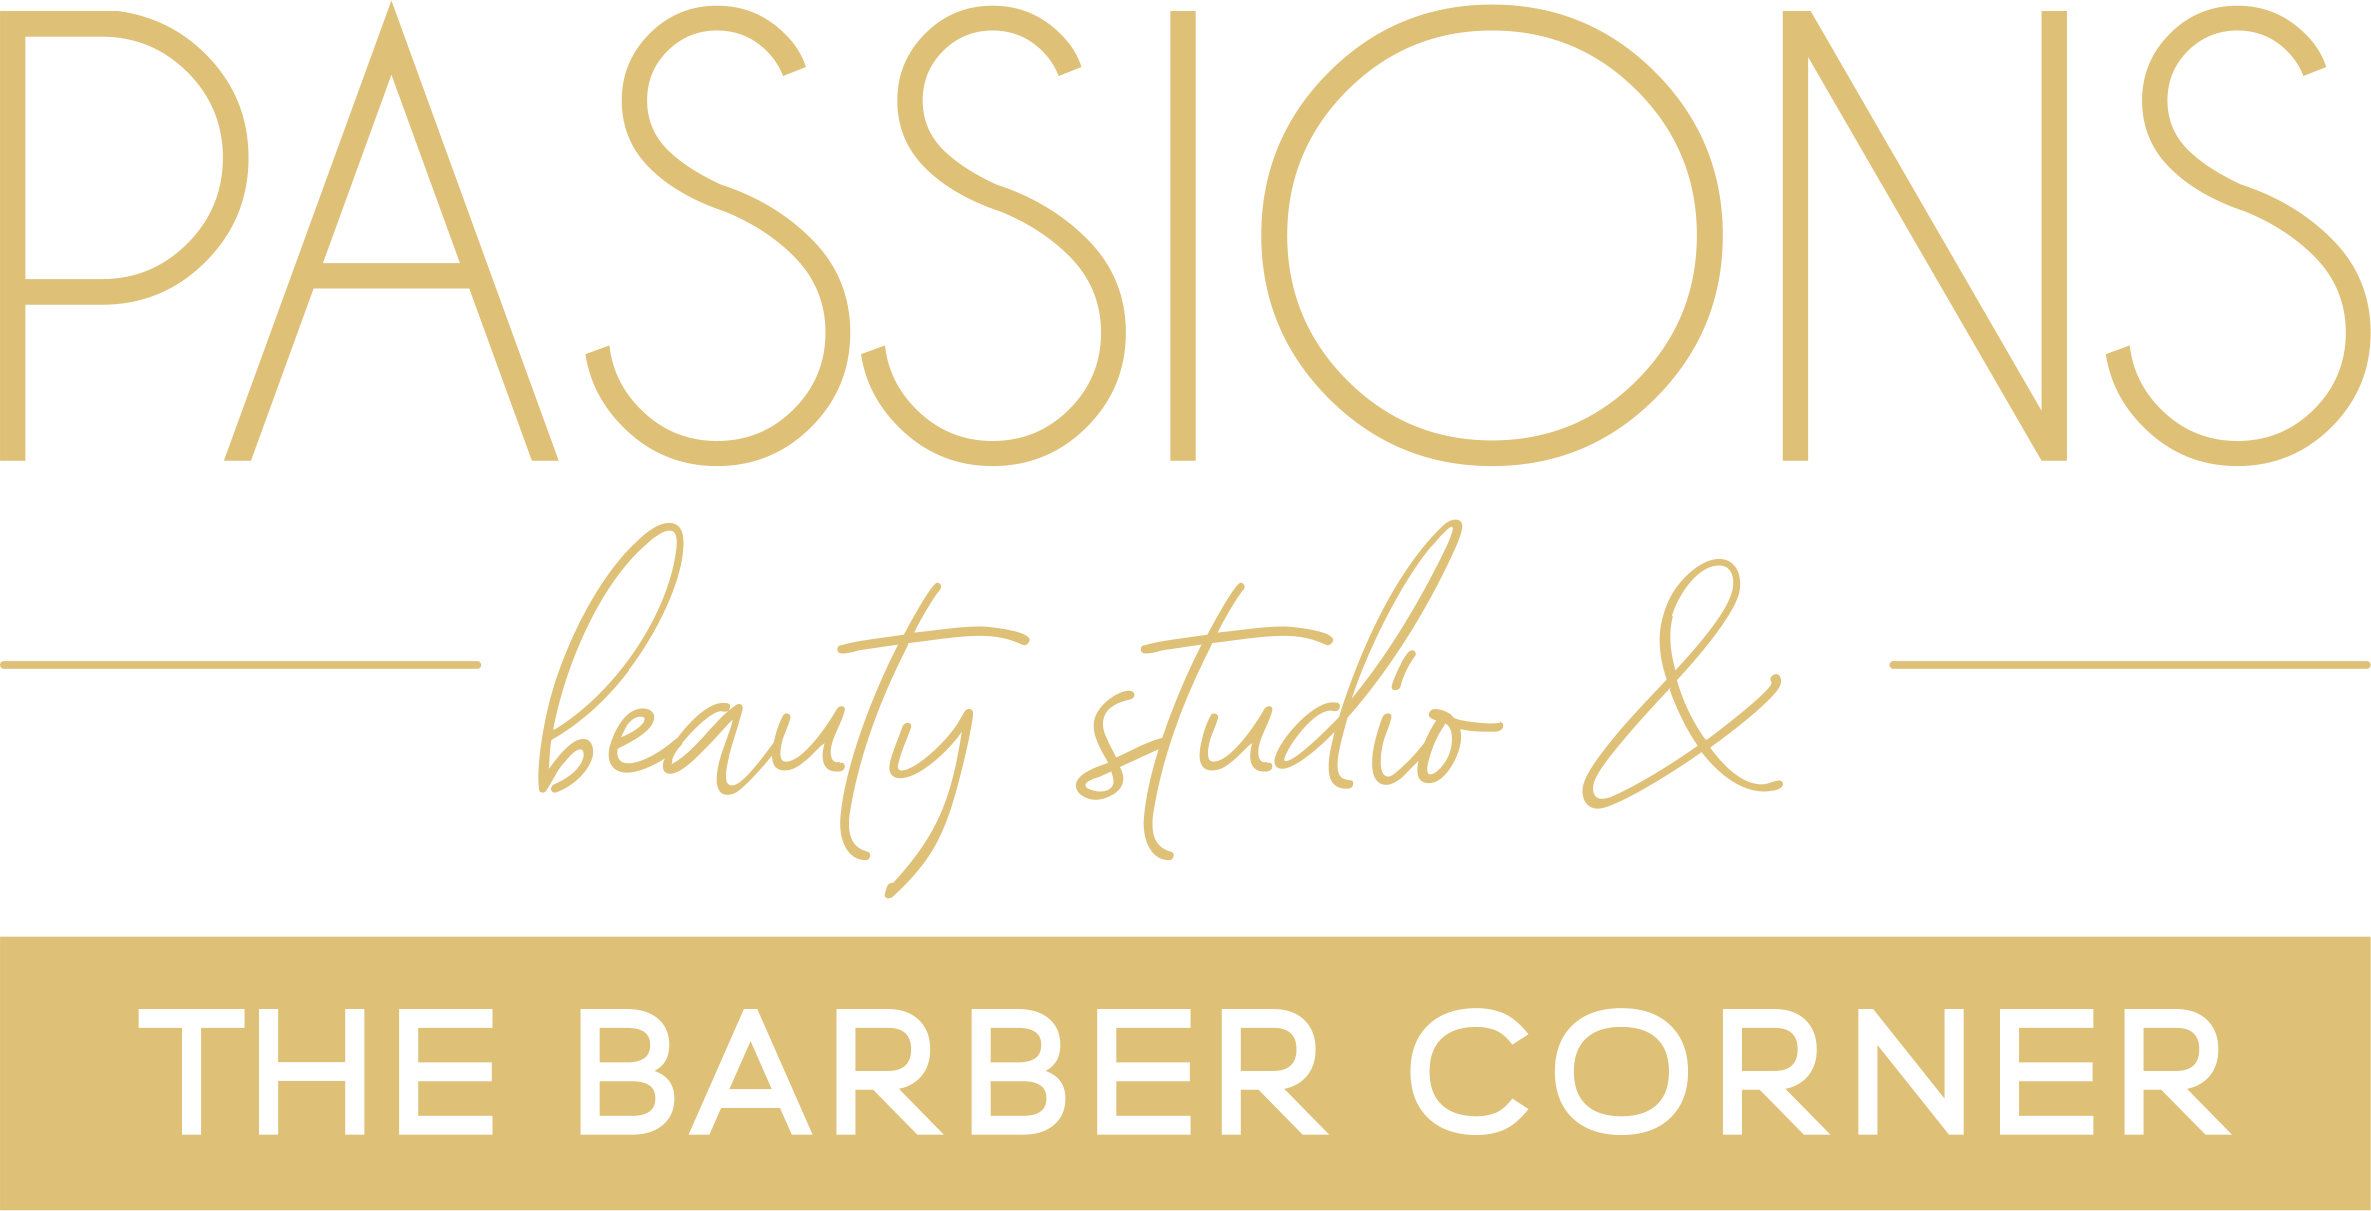 Passions Beauty Studio &amp; The Barber Corner